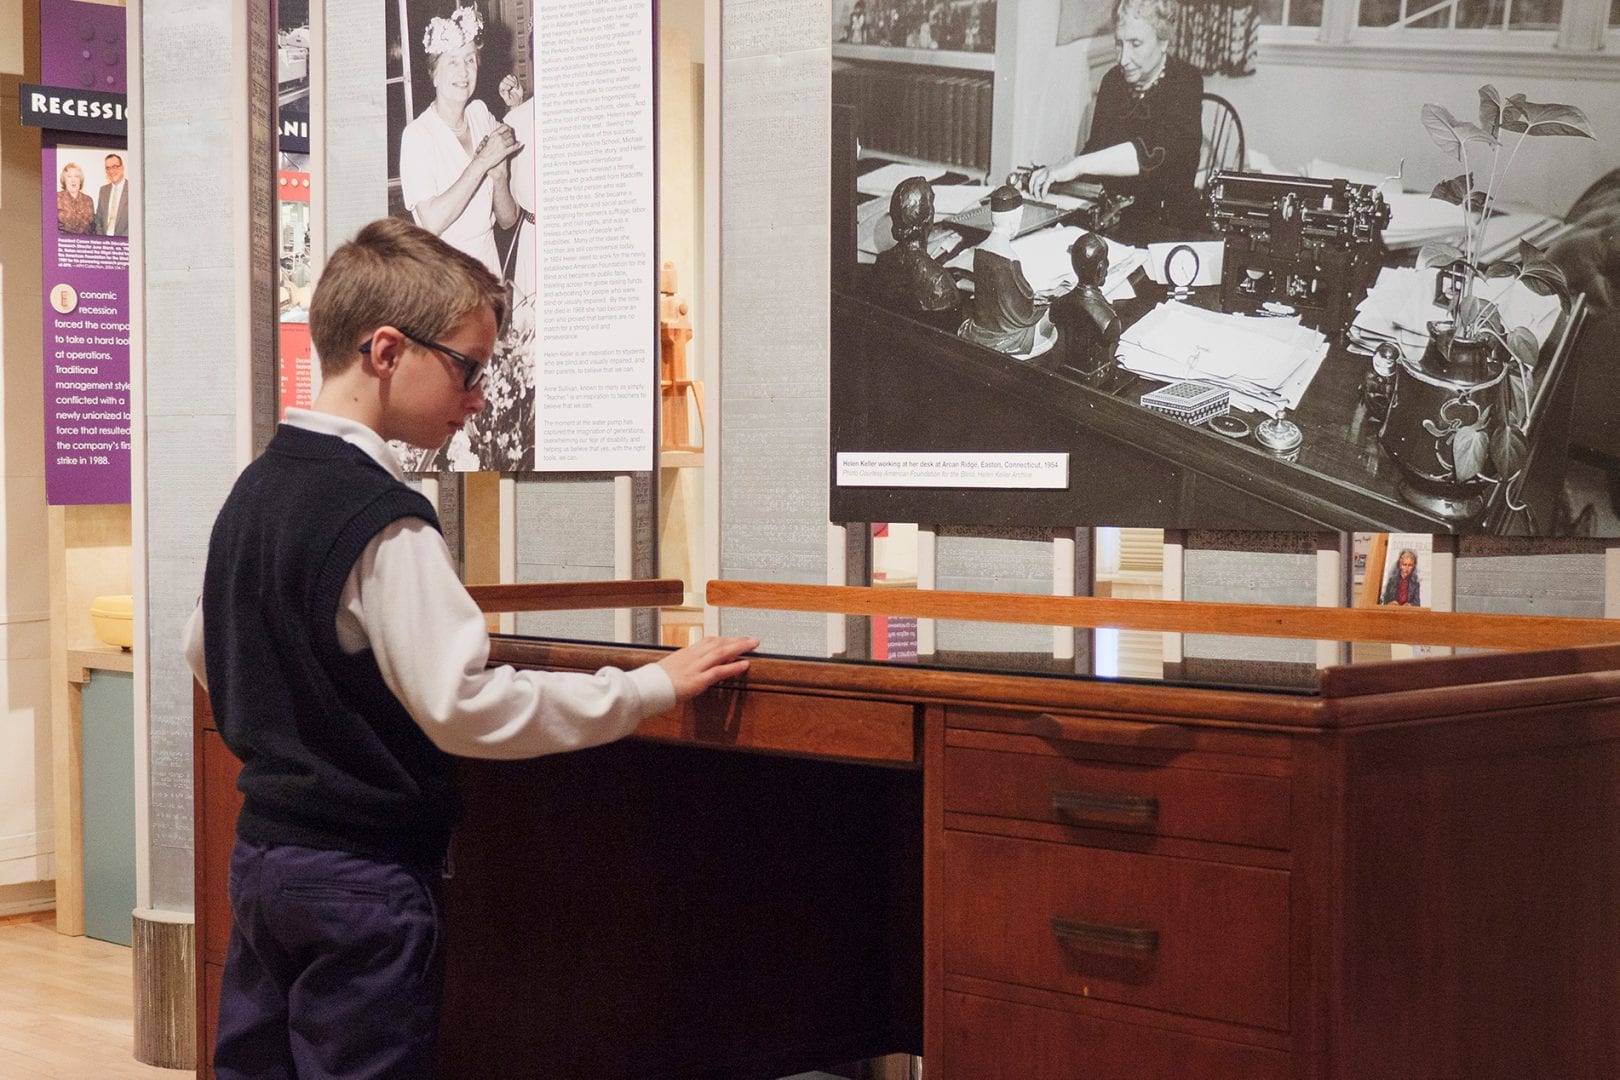 A school boy admiring Helen Keller's Desk